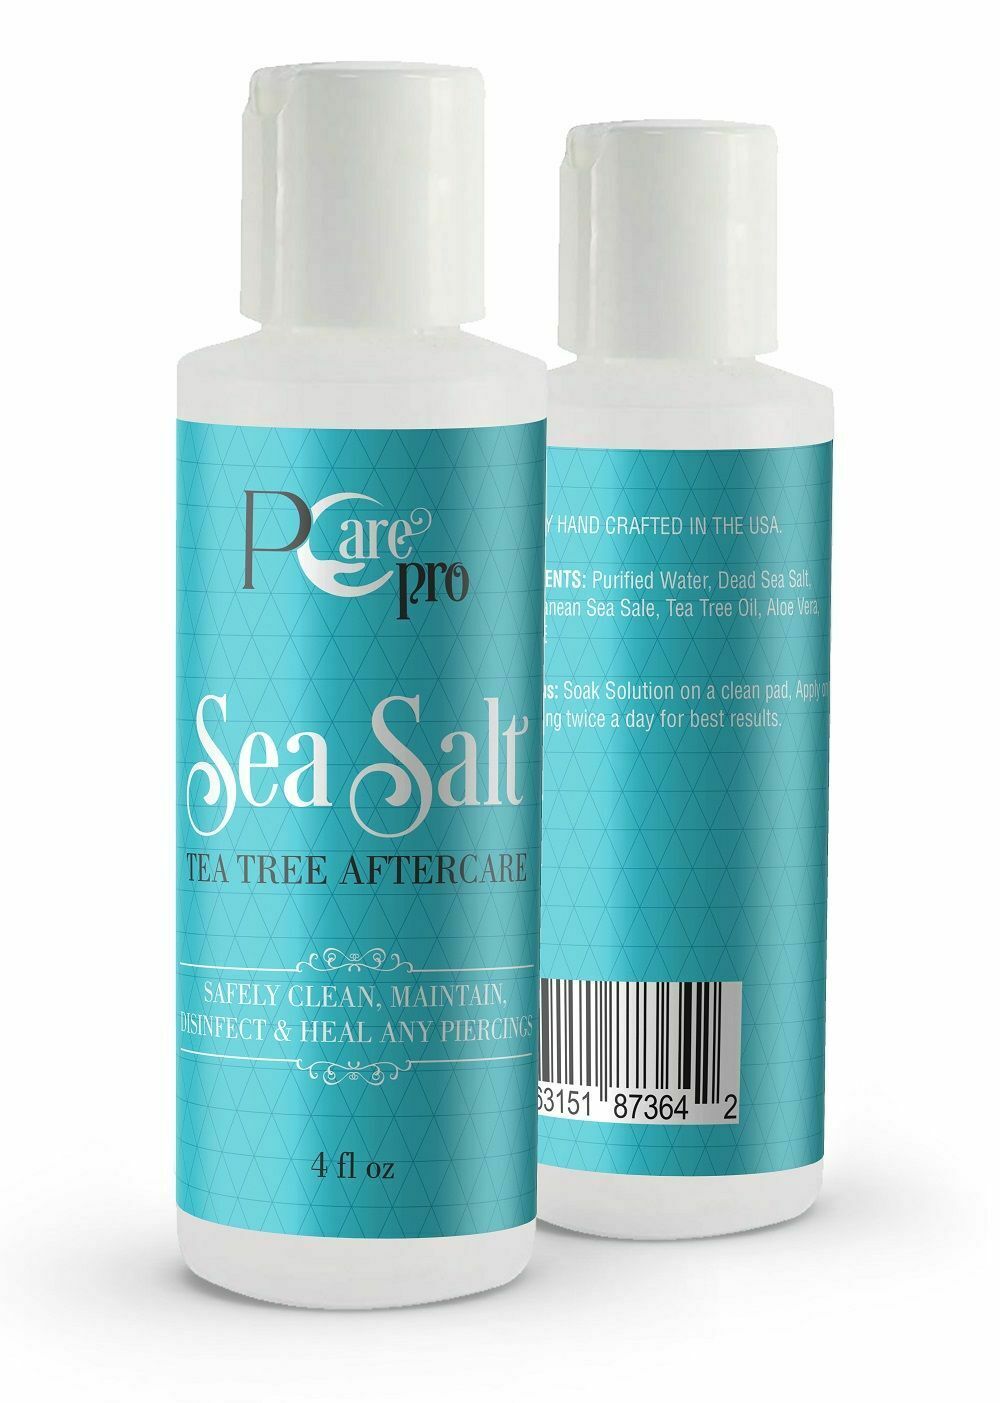 PcarePro Piercing Aftercare Sea Salt Tea Tree Solution 4oz,Clean,Disinfect,heal